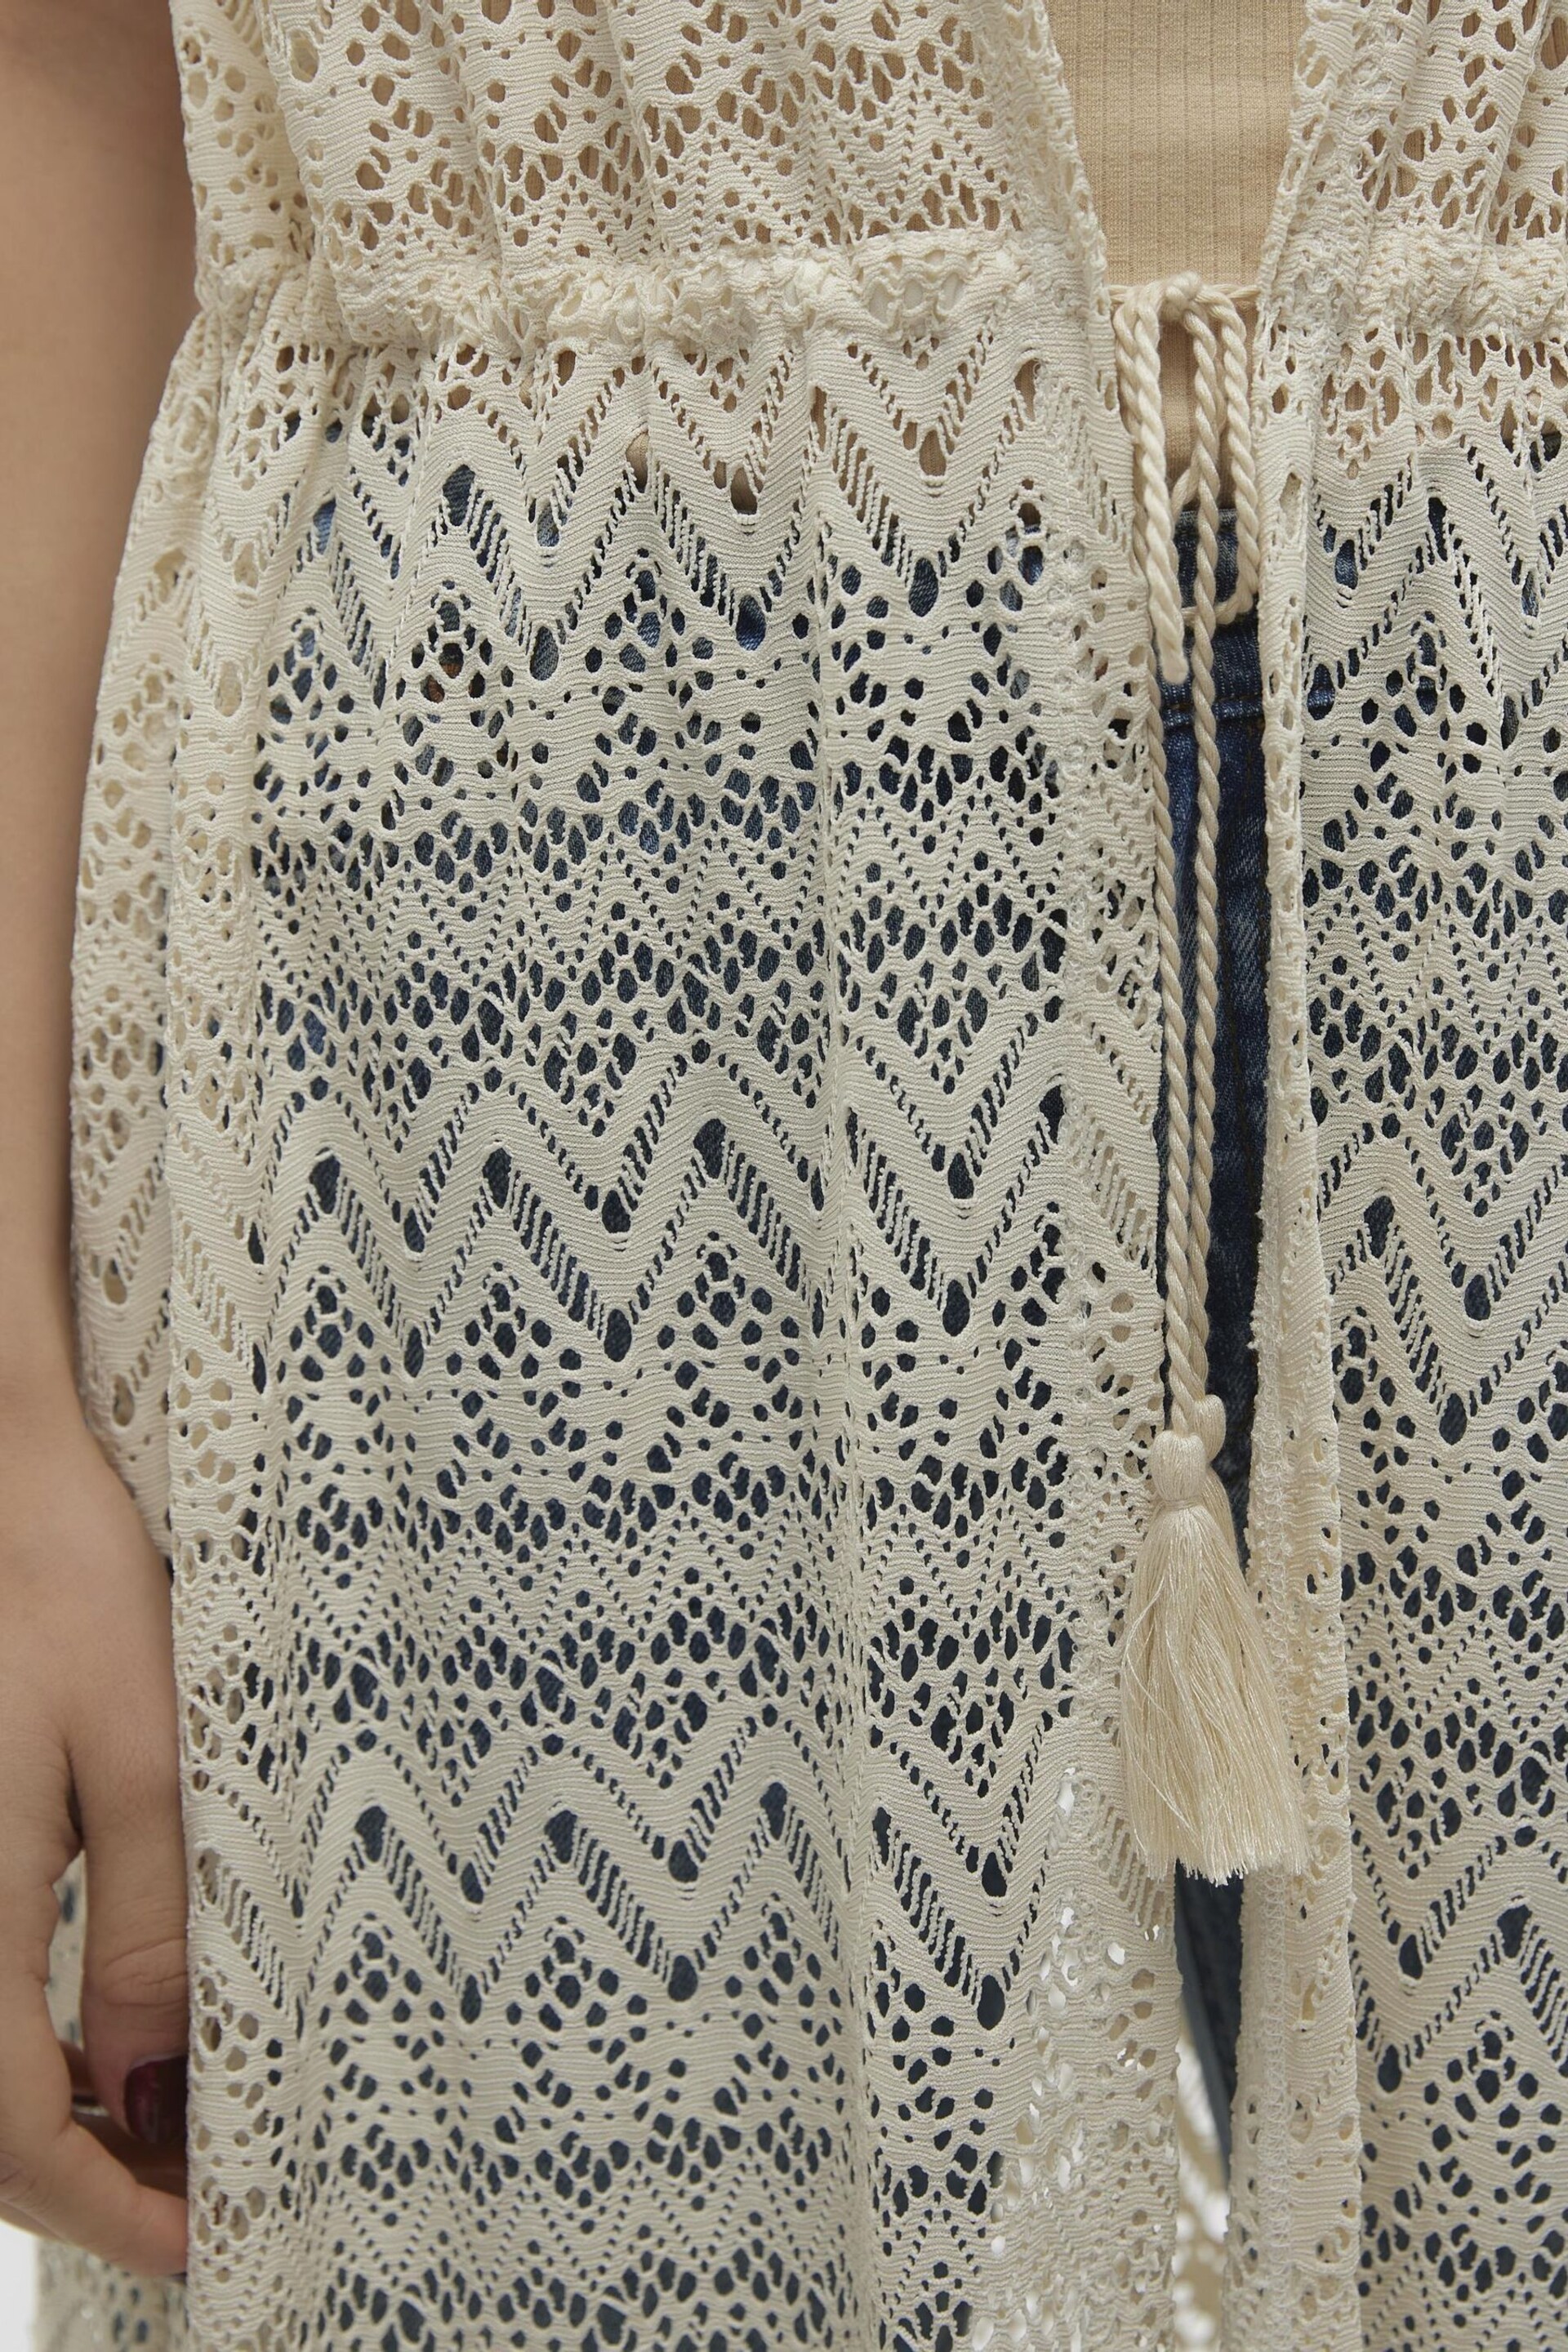 VERO MODA Cream Lightweight Crochet Maxi Beach Cover-Up - Image 4 of 5